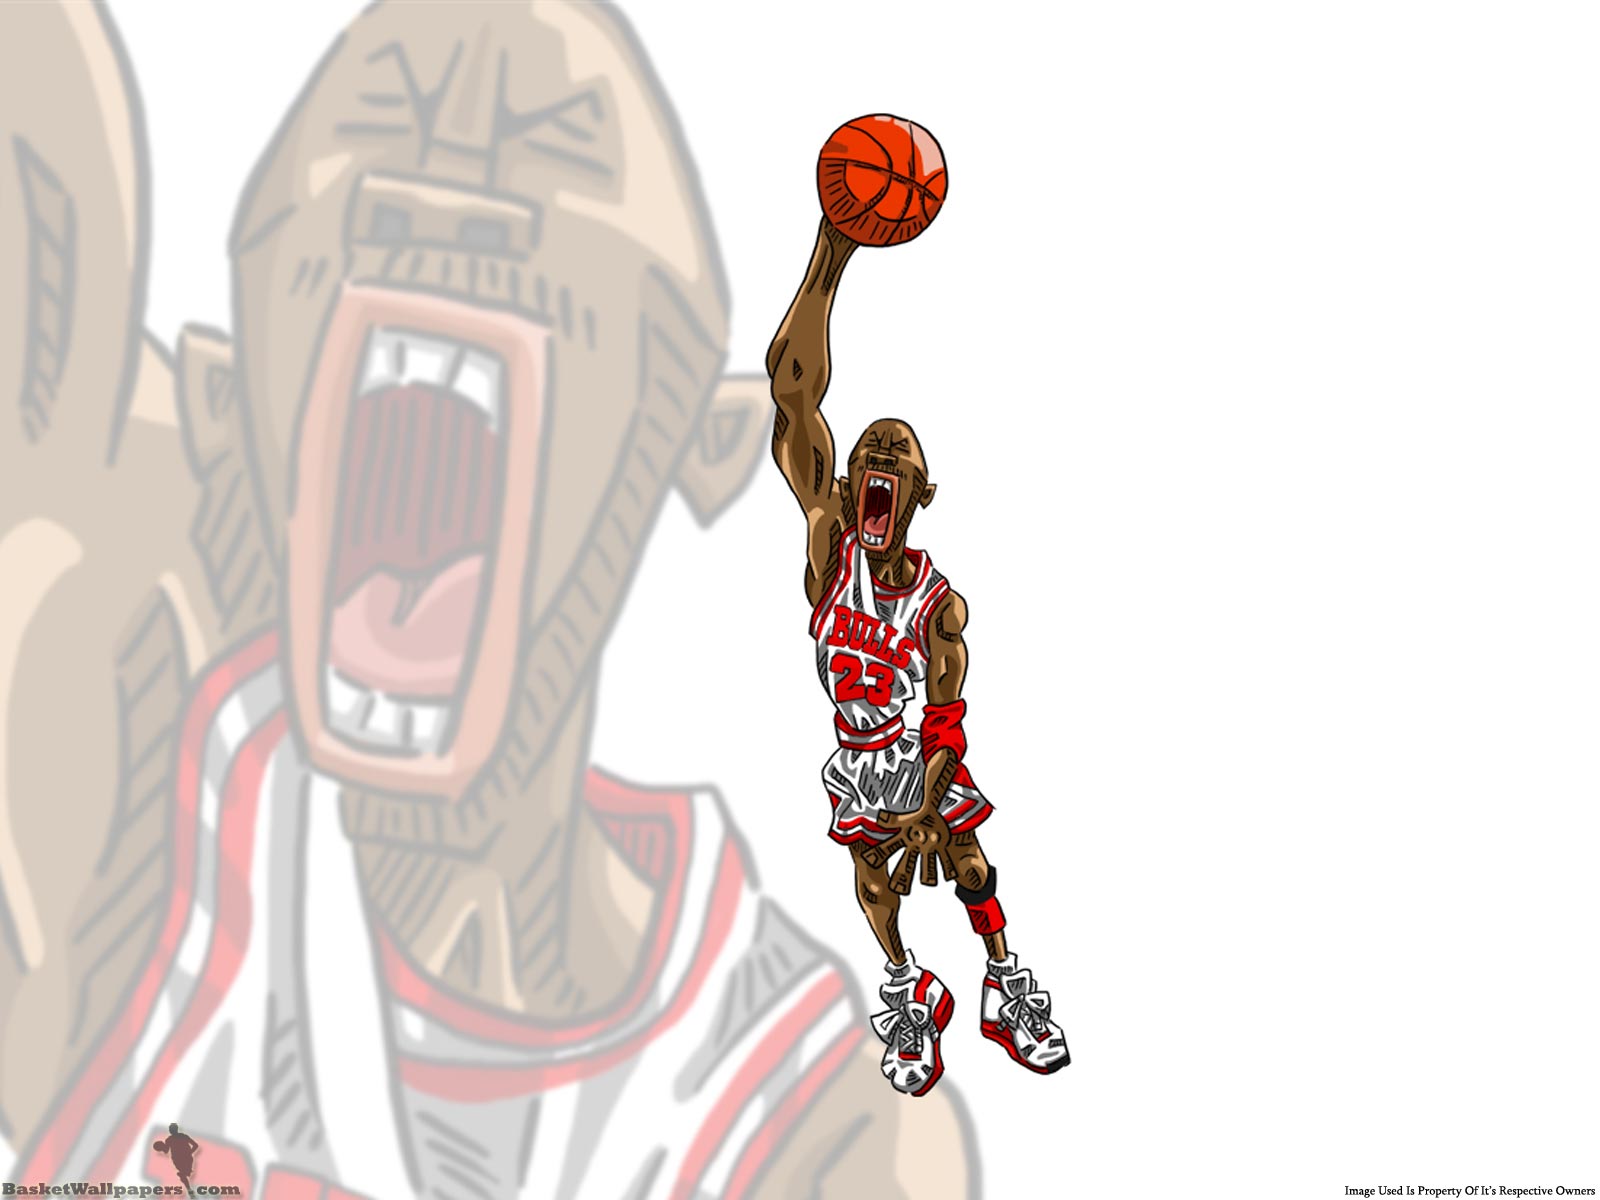 Michael Jordan Wallpapers Basketball Wallpapers at BasketWallpapers